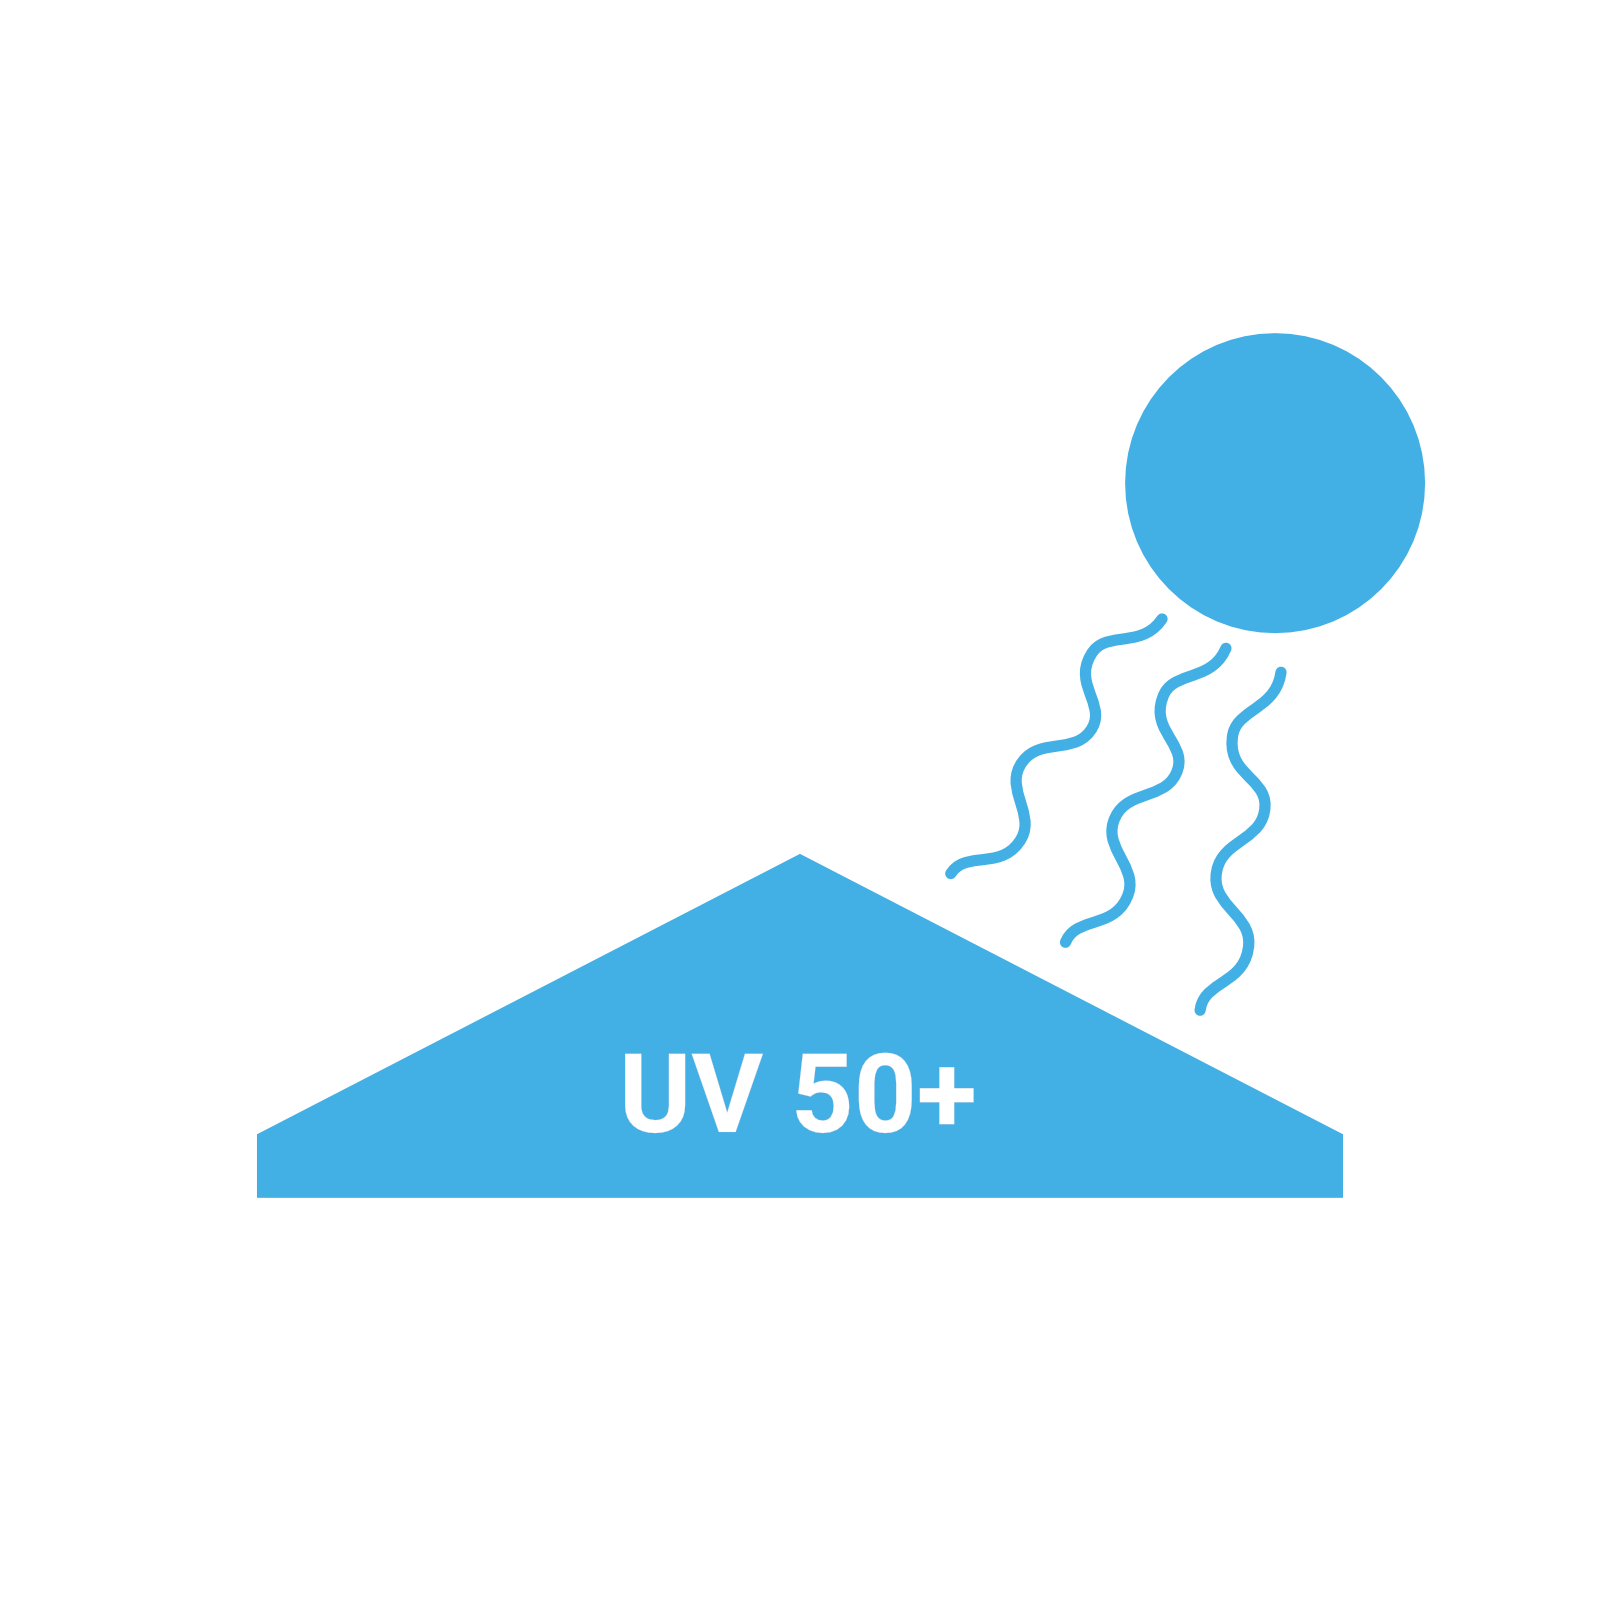 UV 50+ Schutz gegen Sonnenbrand